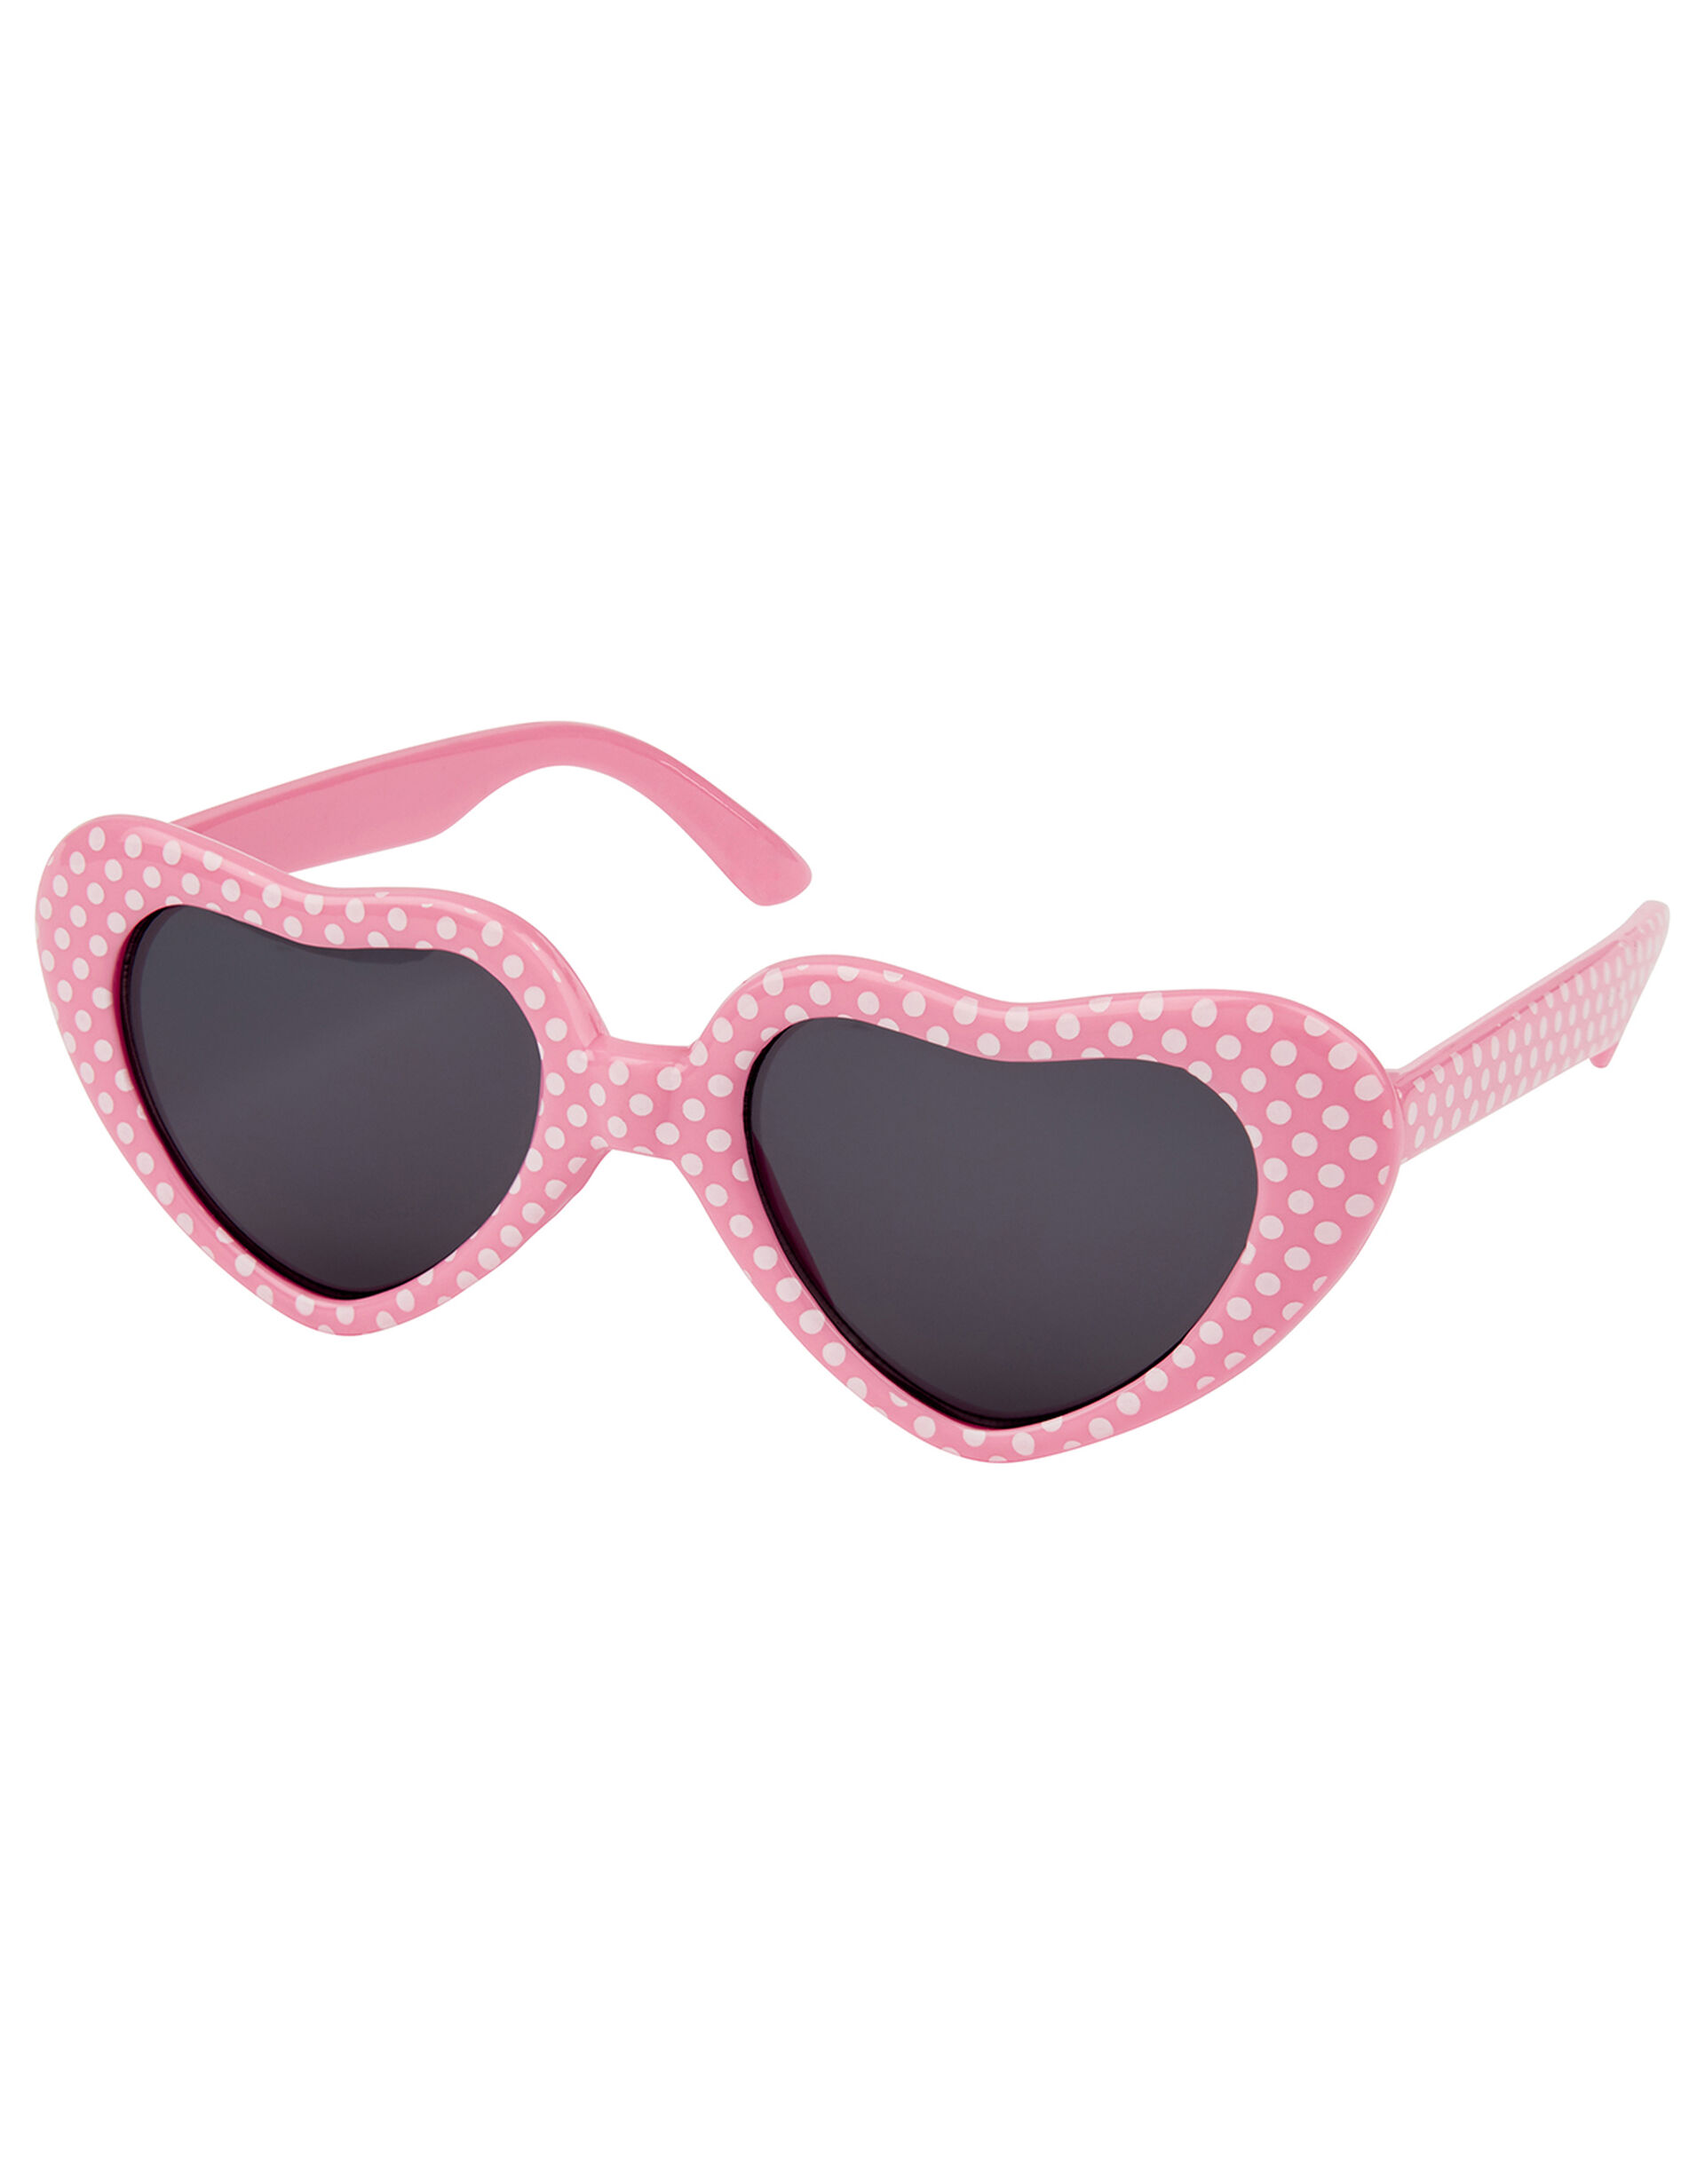 Baby Dotty Heart Sunglasses, , large